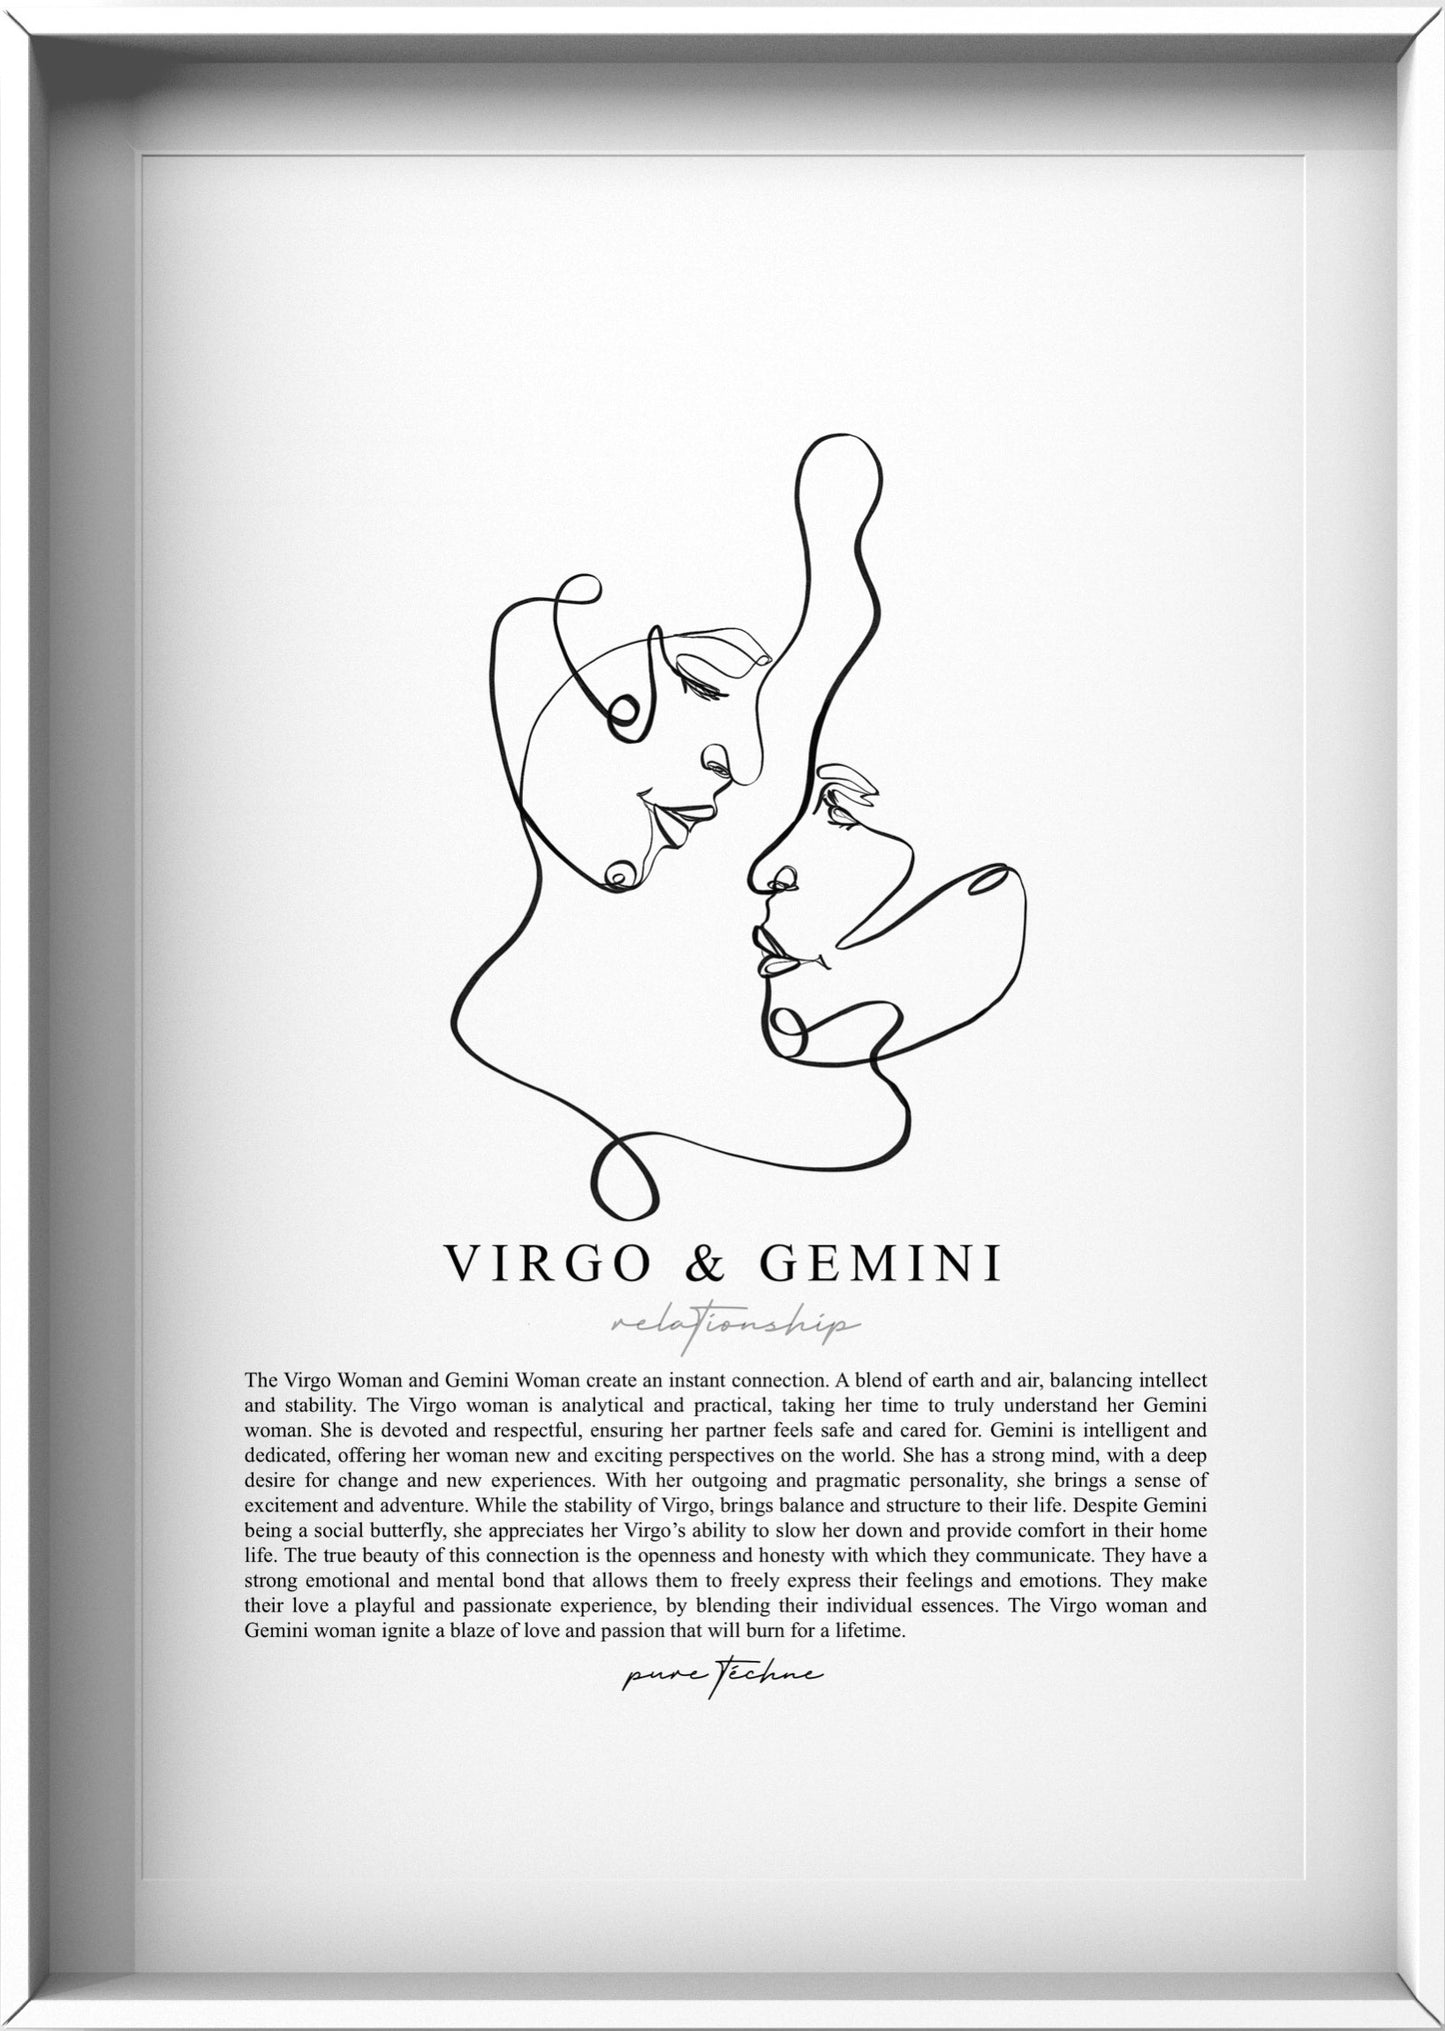 Virgo Woman & Gemini Woman